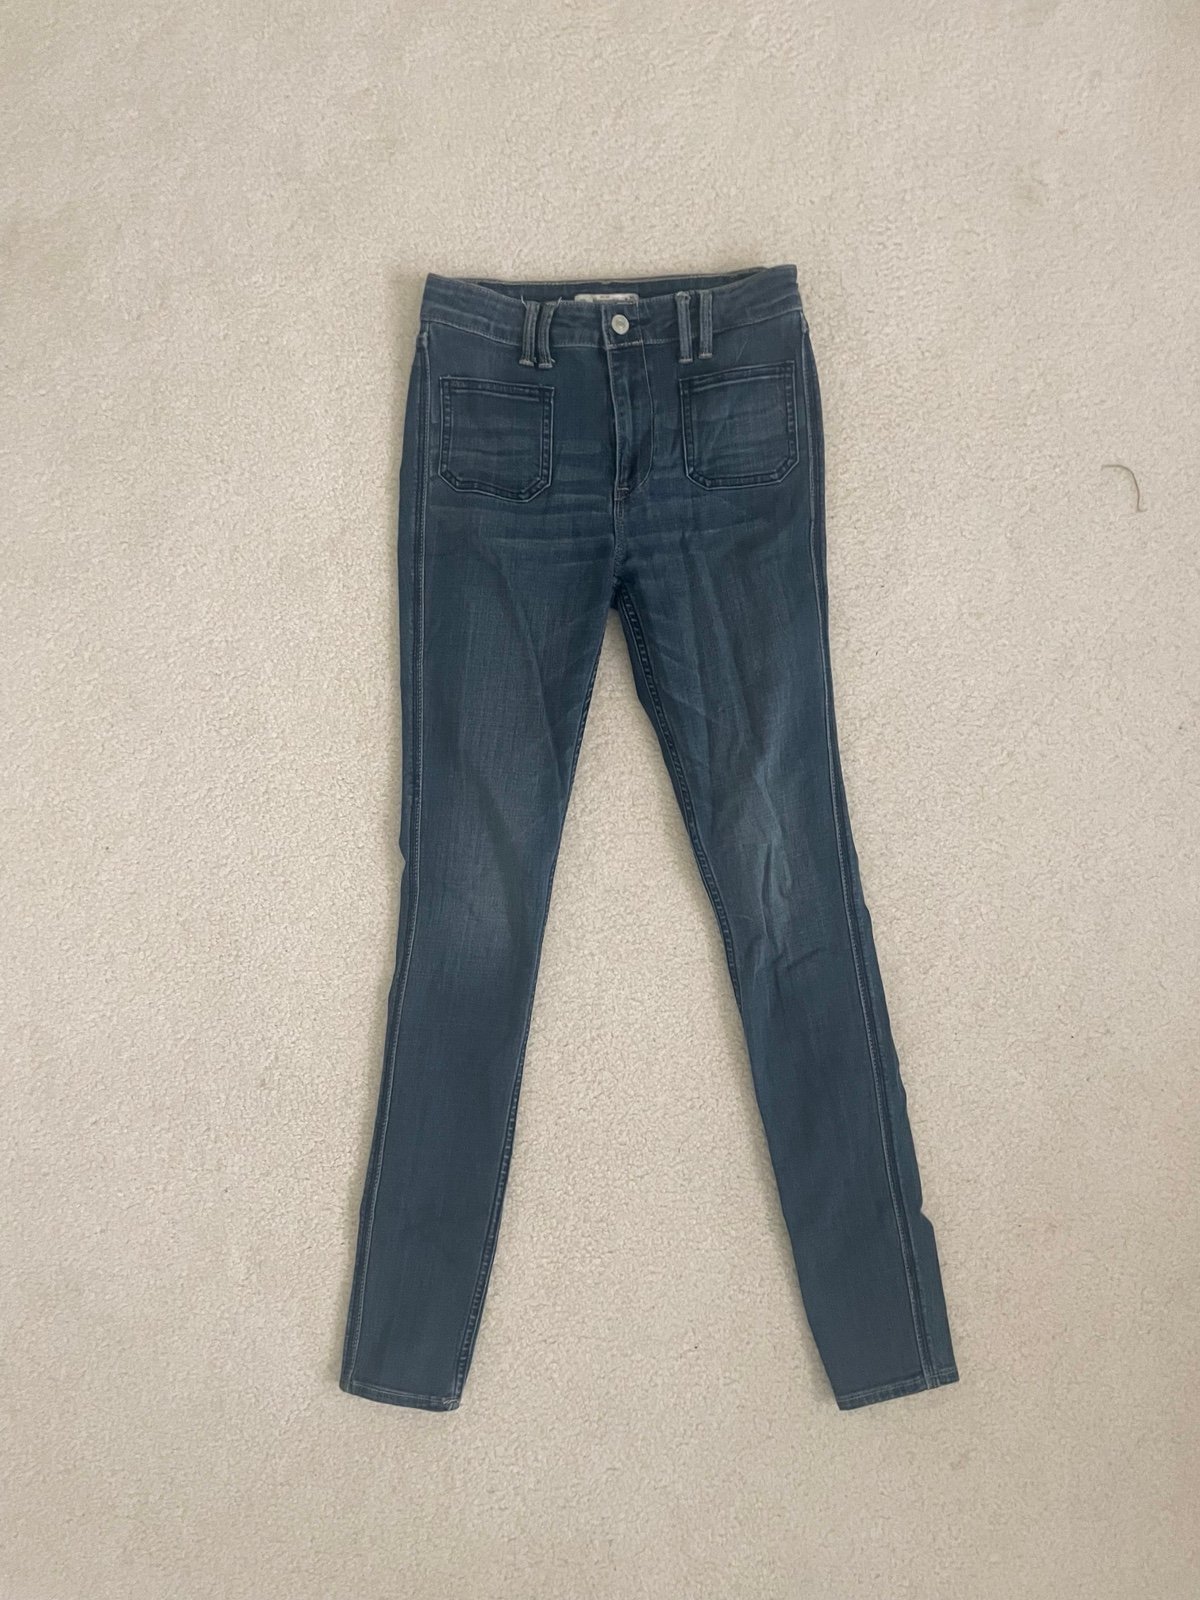 Perfect Abercrombie Skinny Jeans size 25 ikgEddUEG Whol